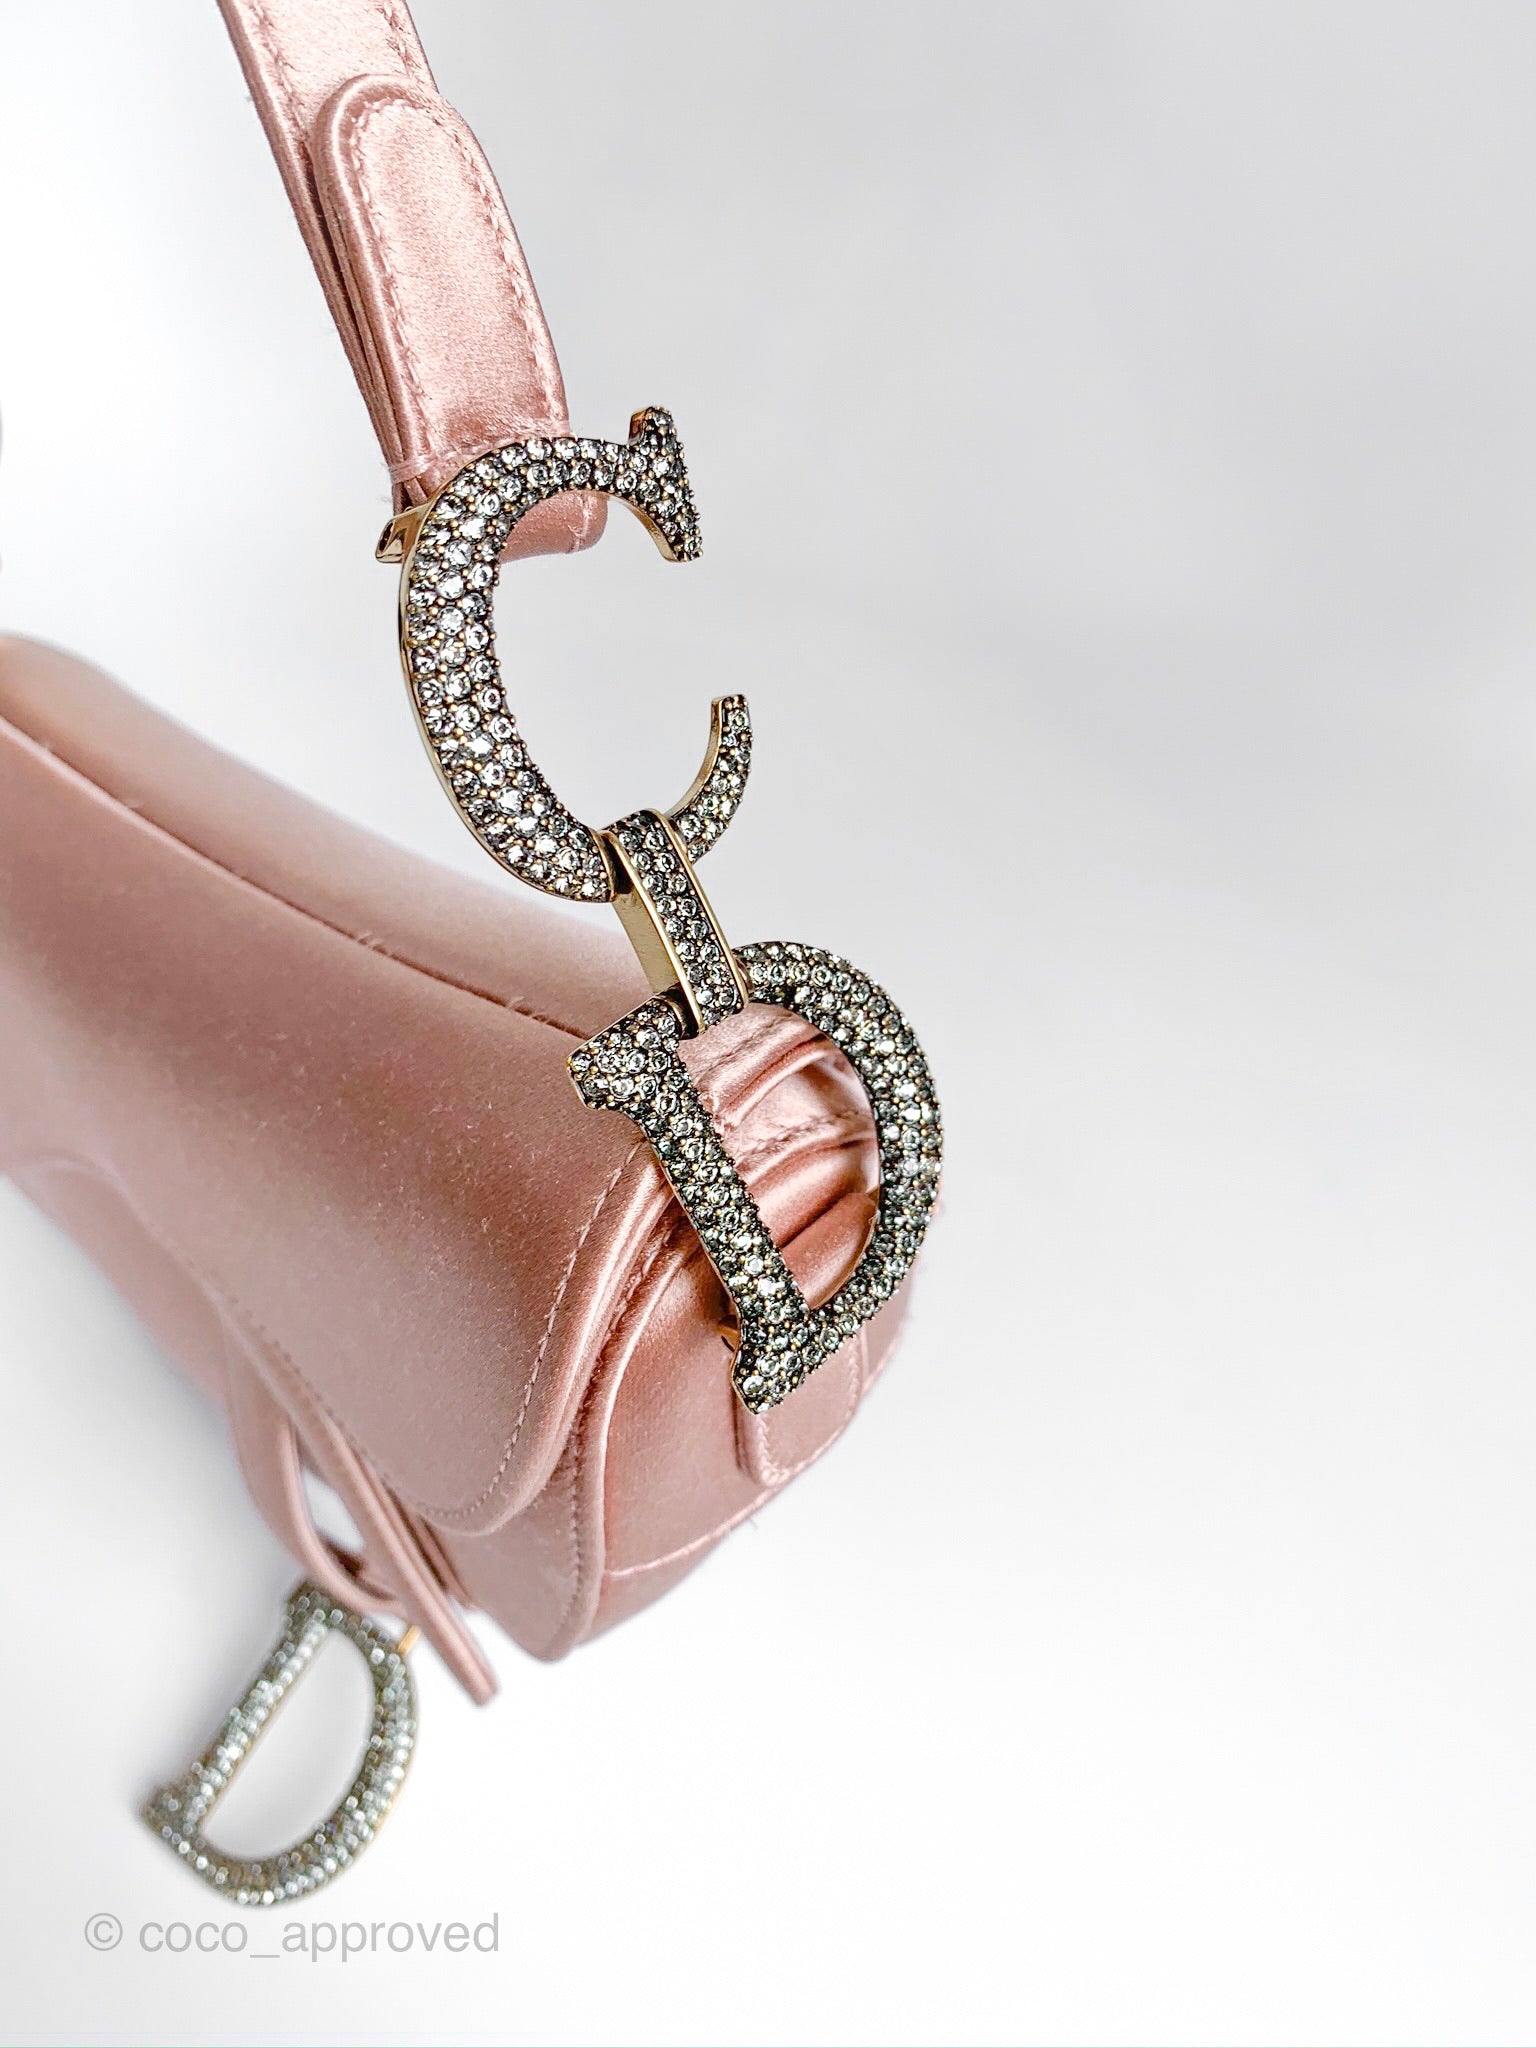 Dior Rose Pink Mini Saddle Bag – The Stock Room NJ